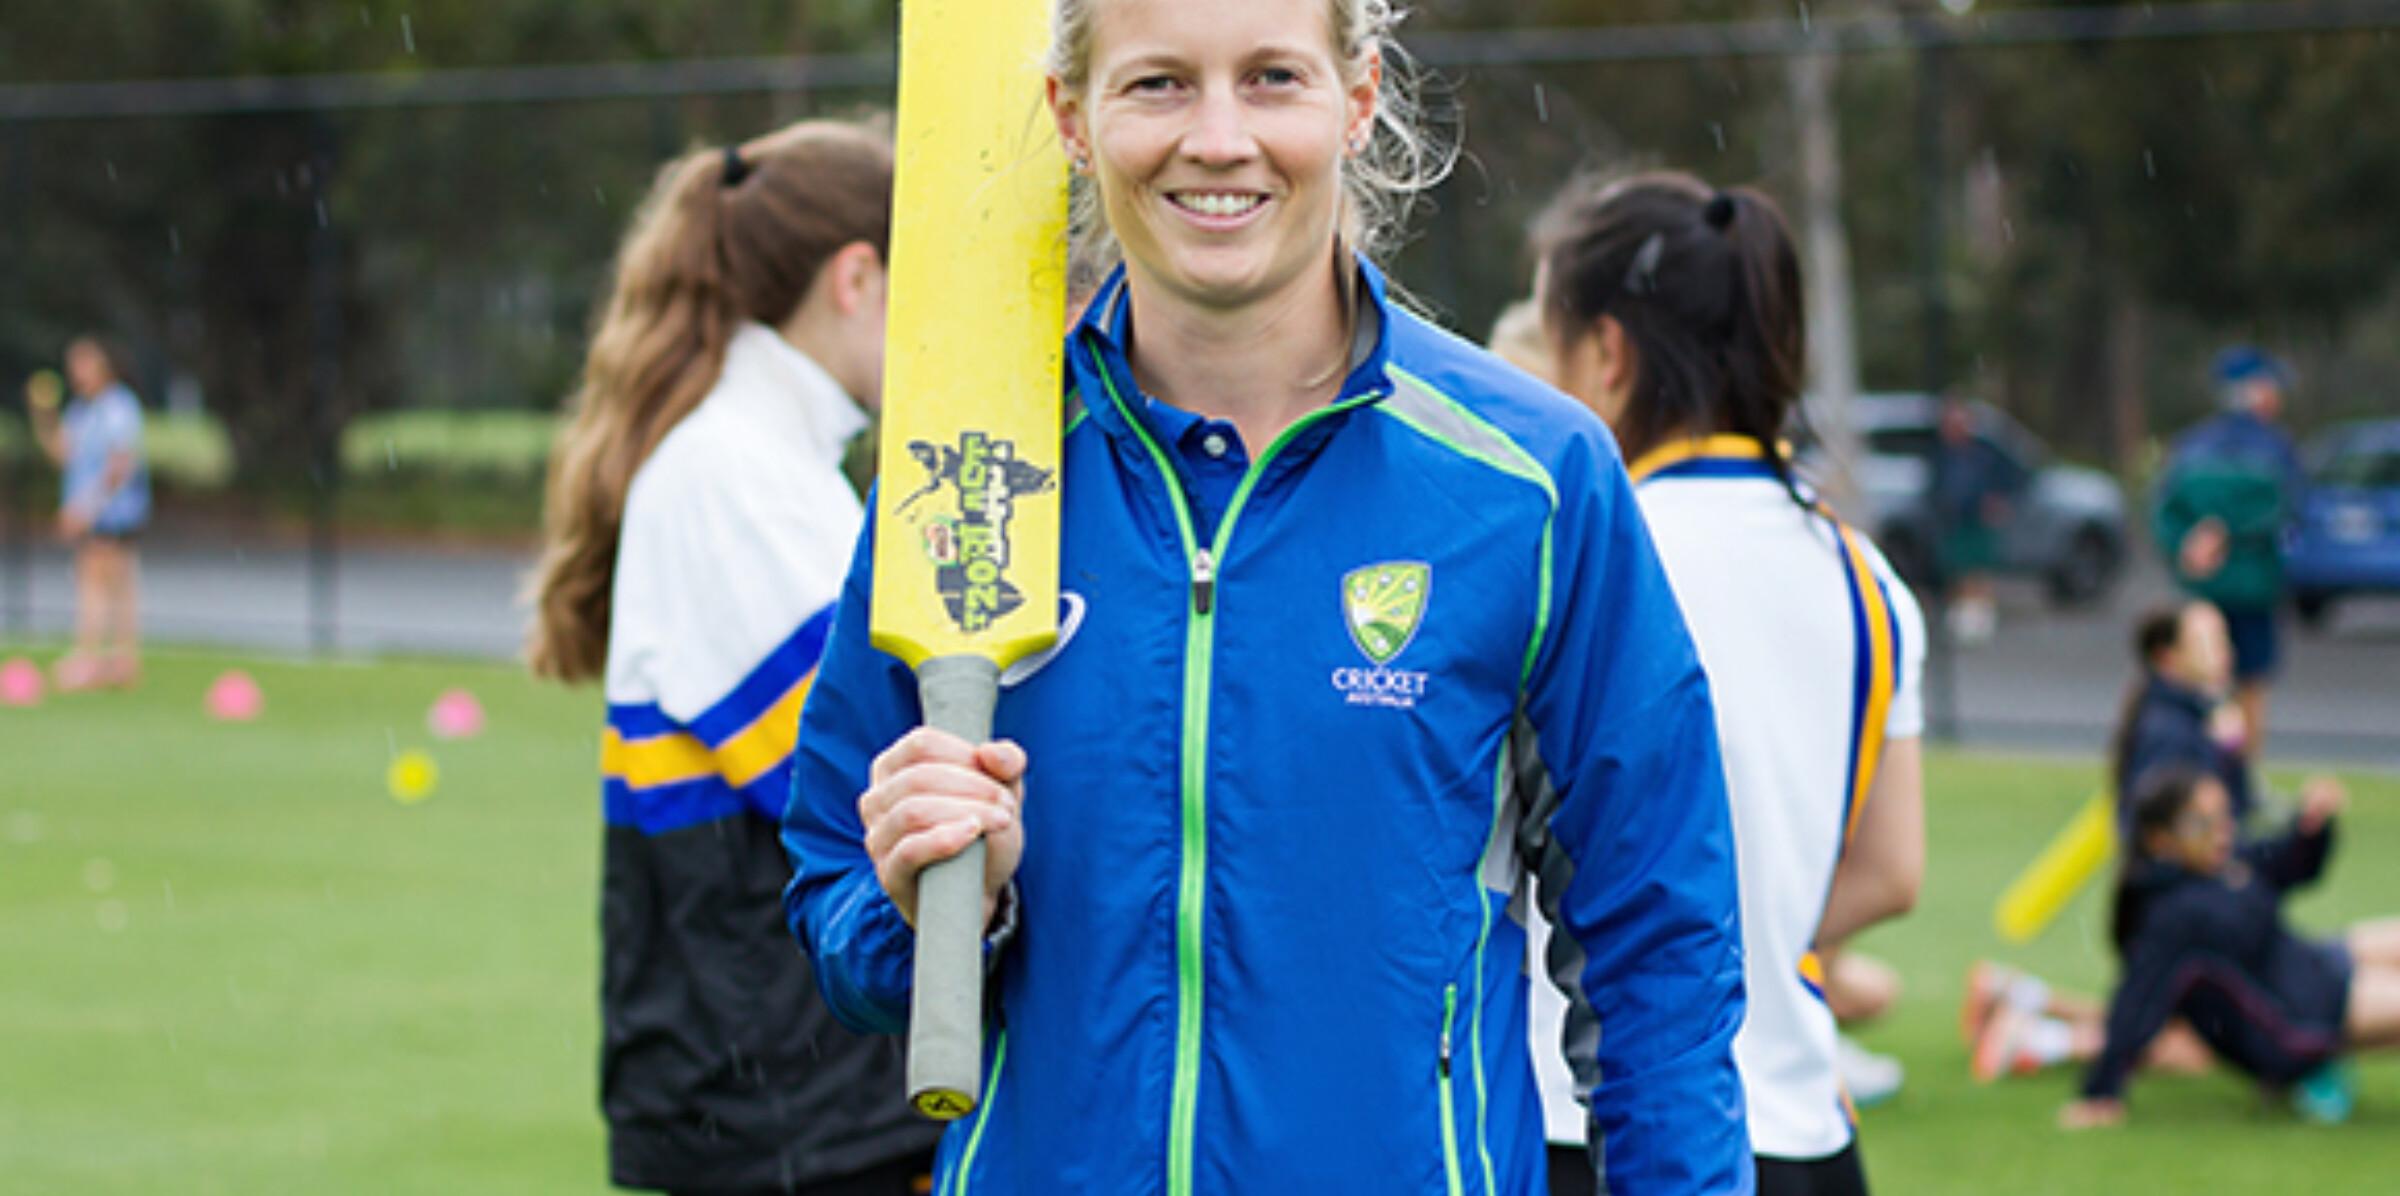 2021 Carey Medallist, Meg Lanning: cricket great and social advocate